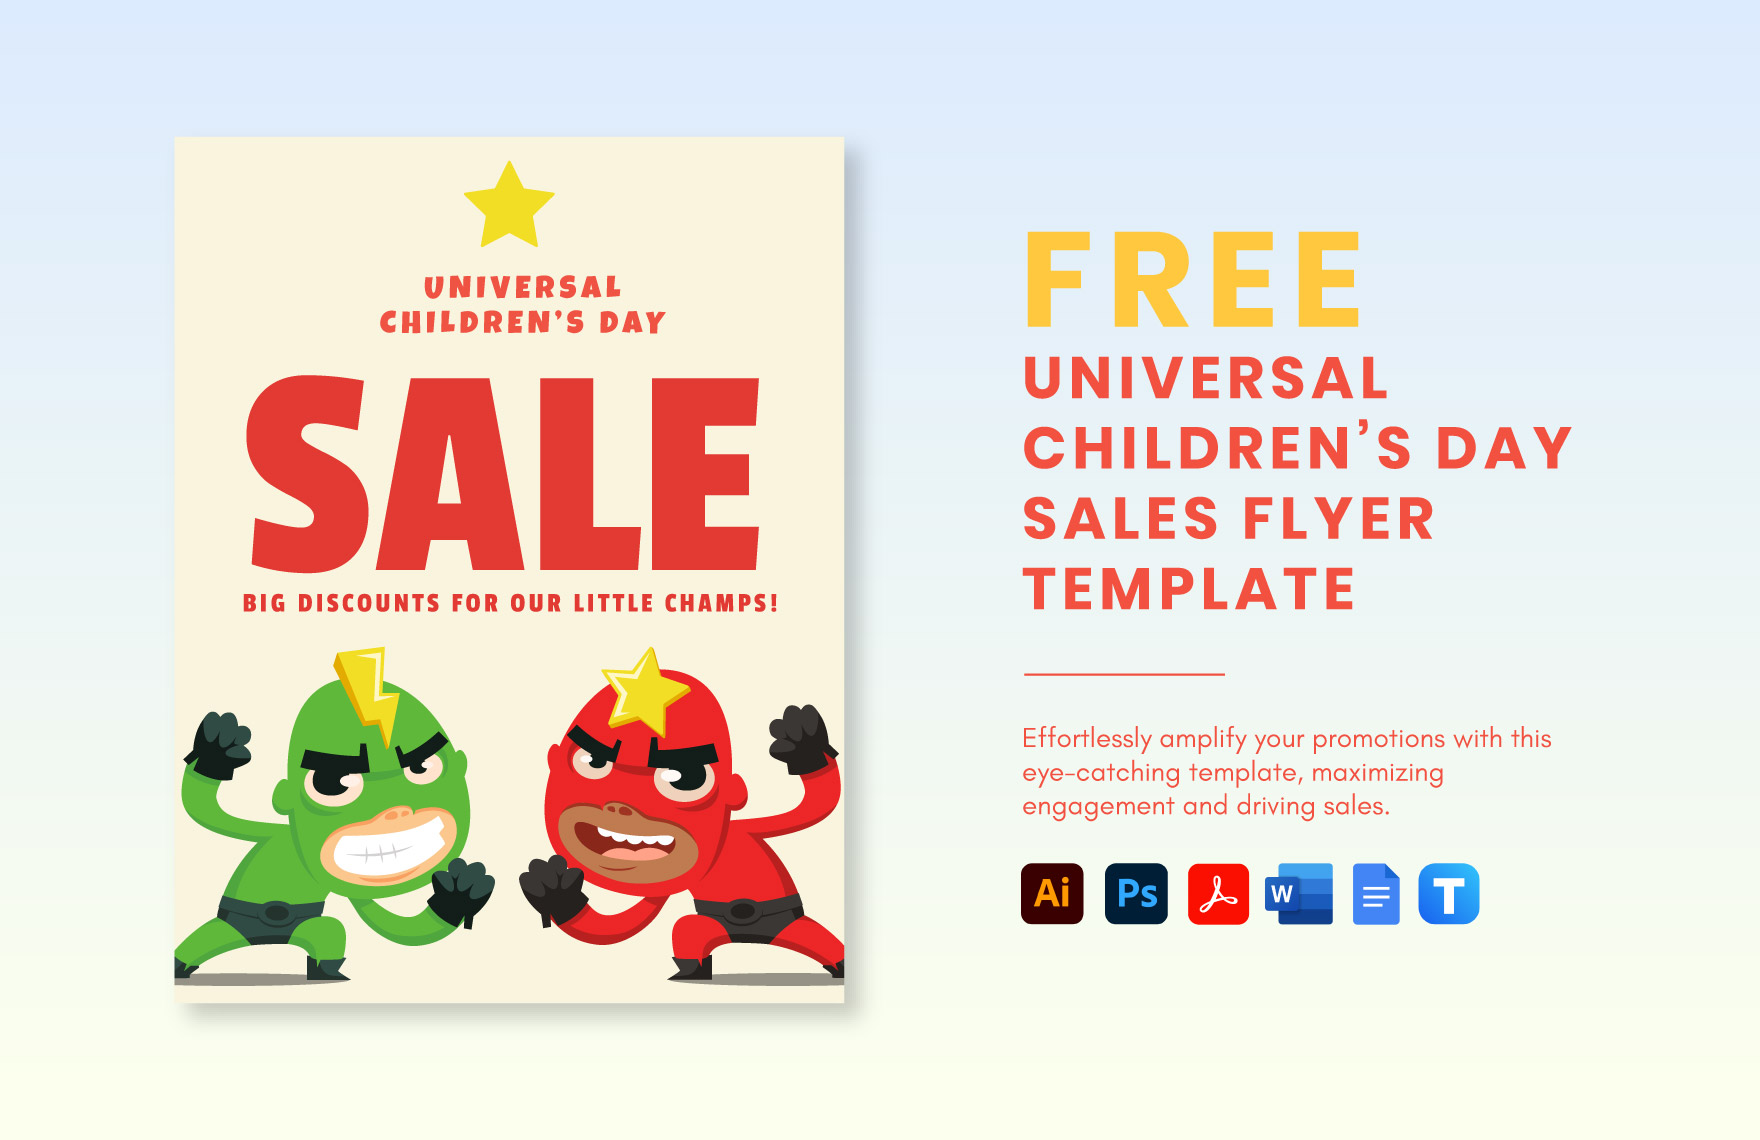 Universal Children’s Day Sales Flyer Template